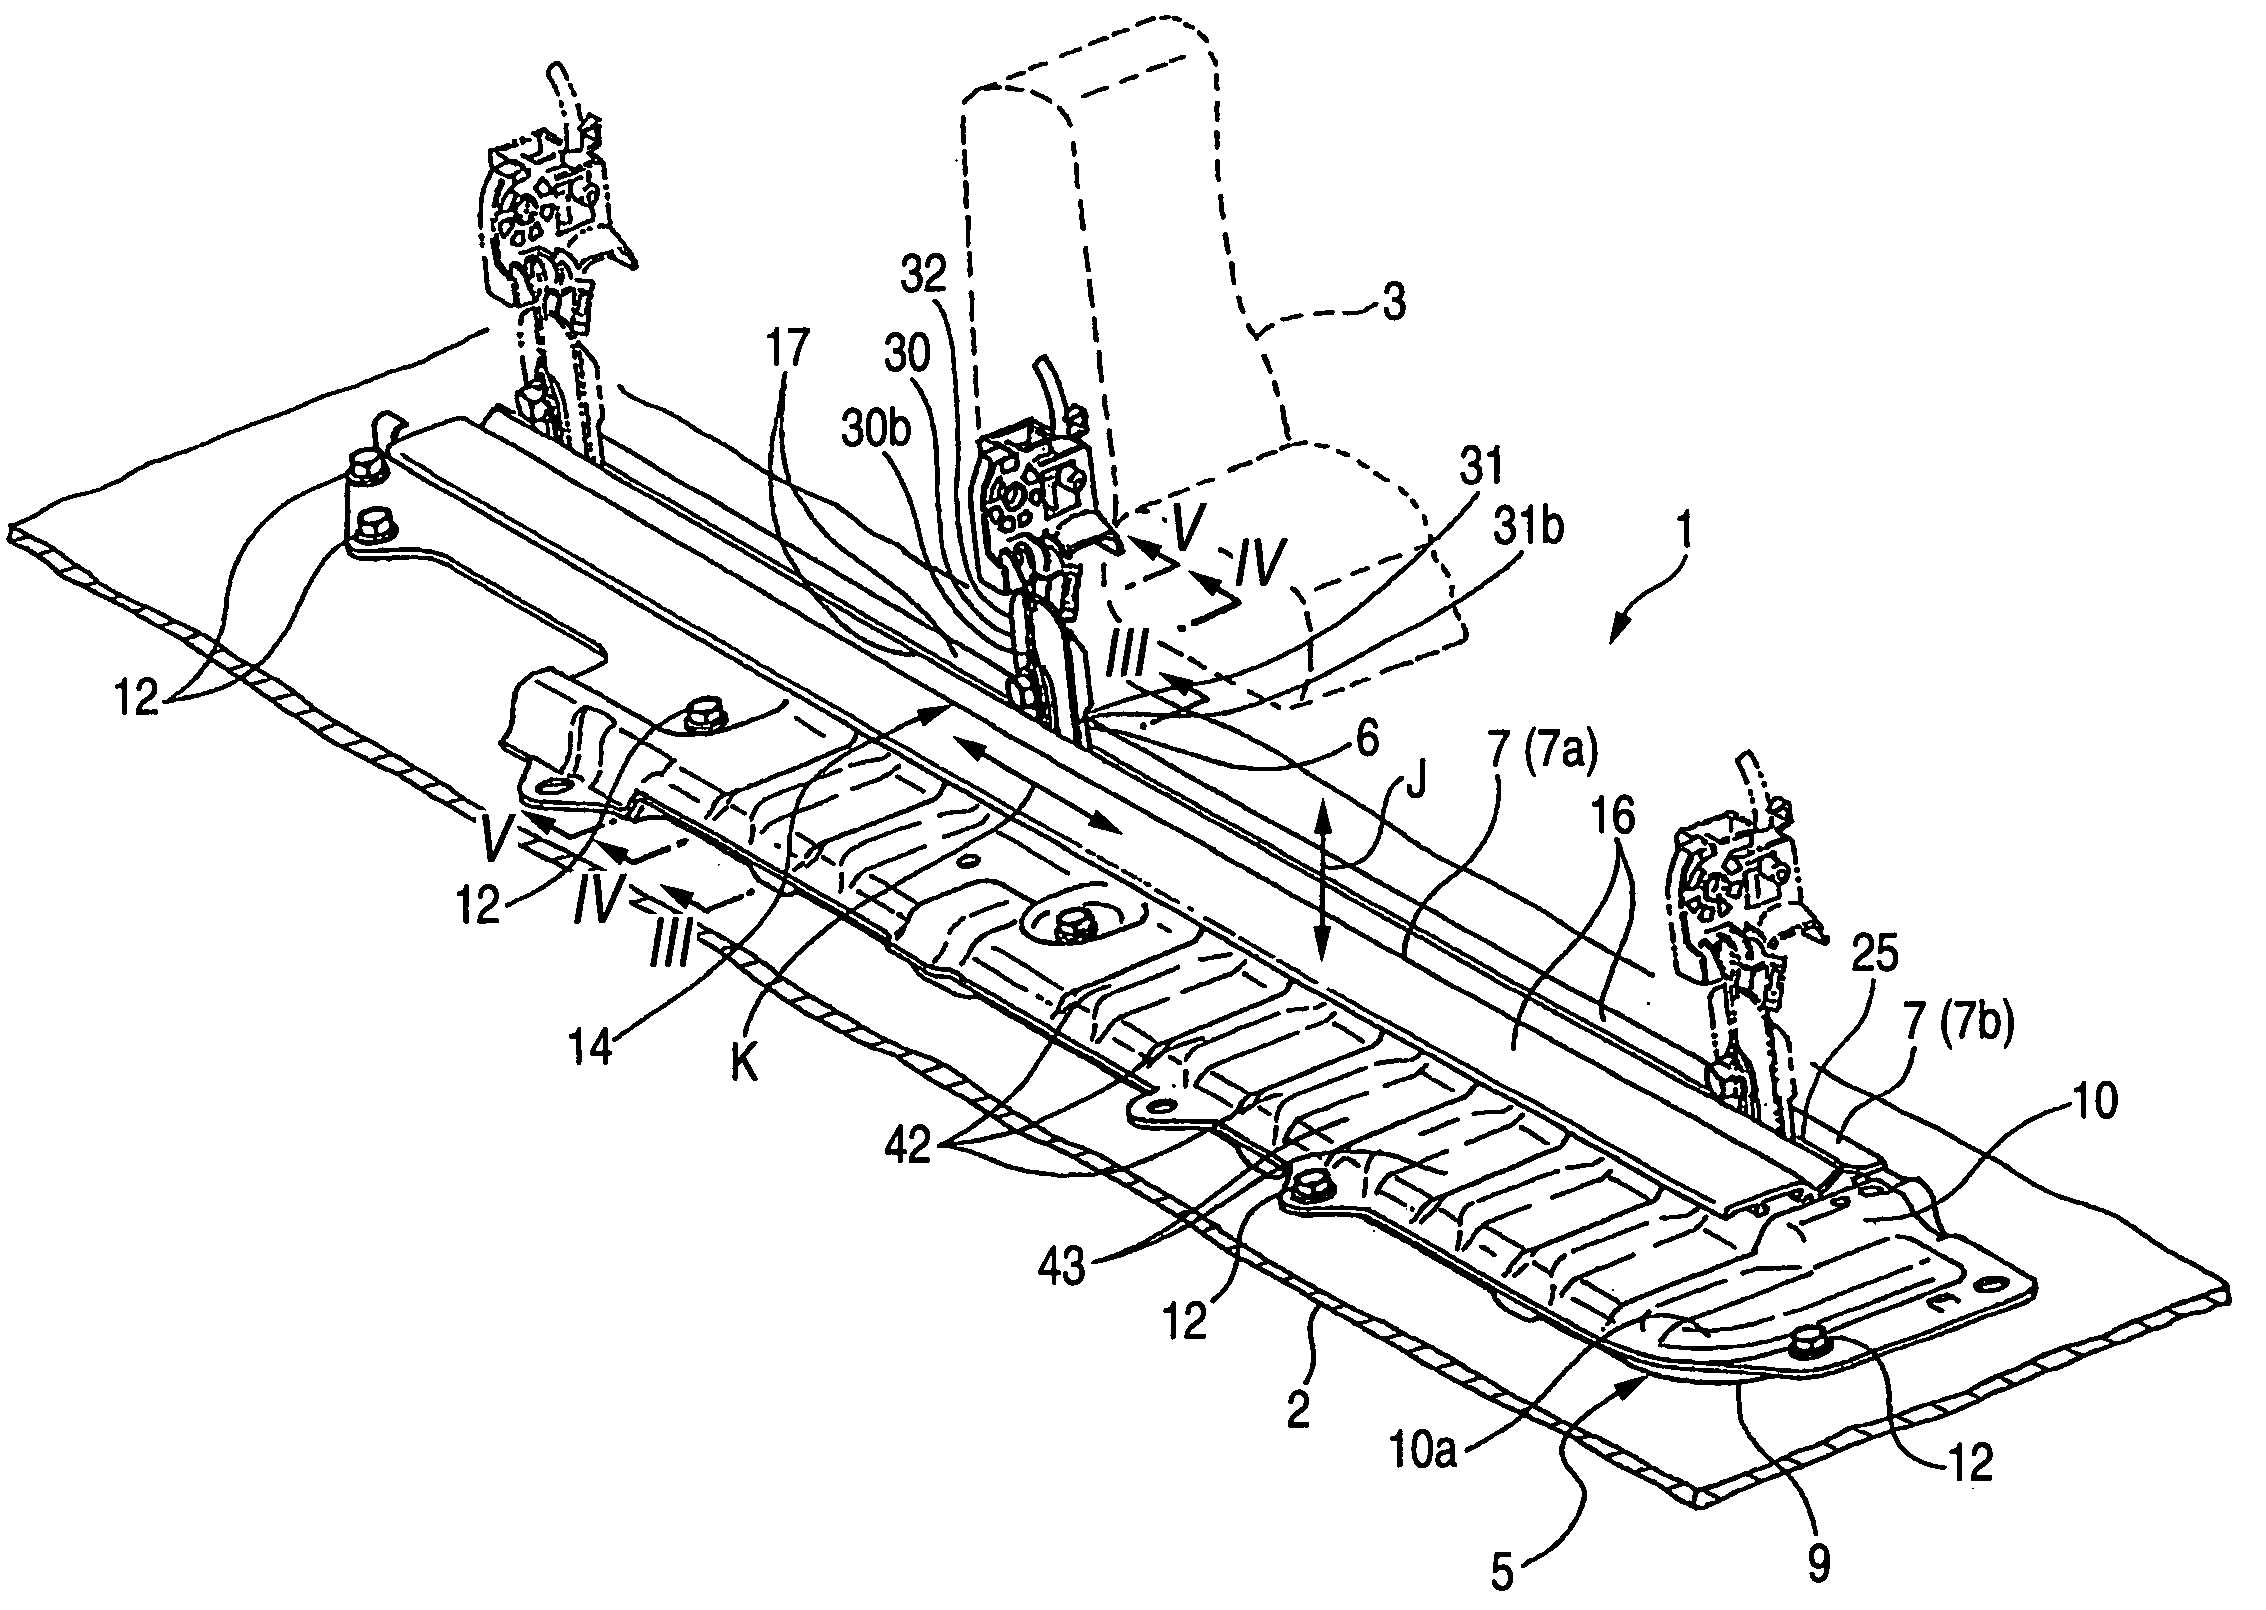 Slide wiring apparatus